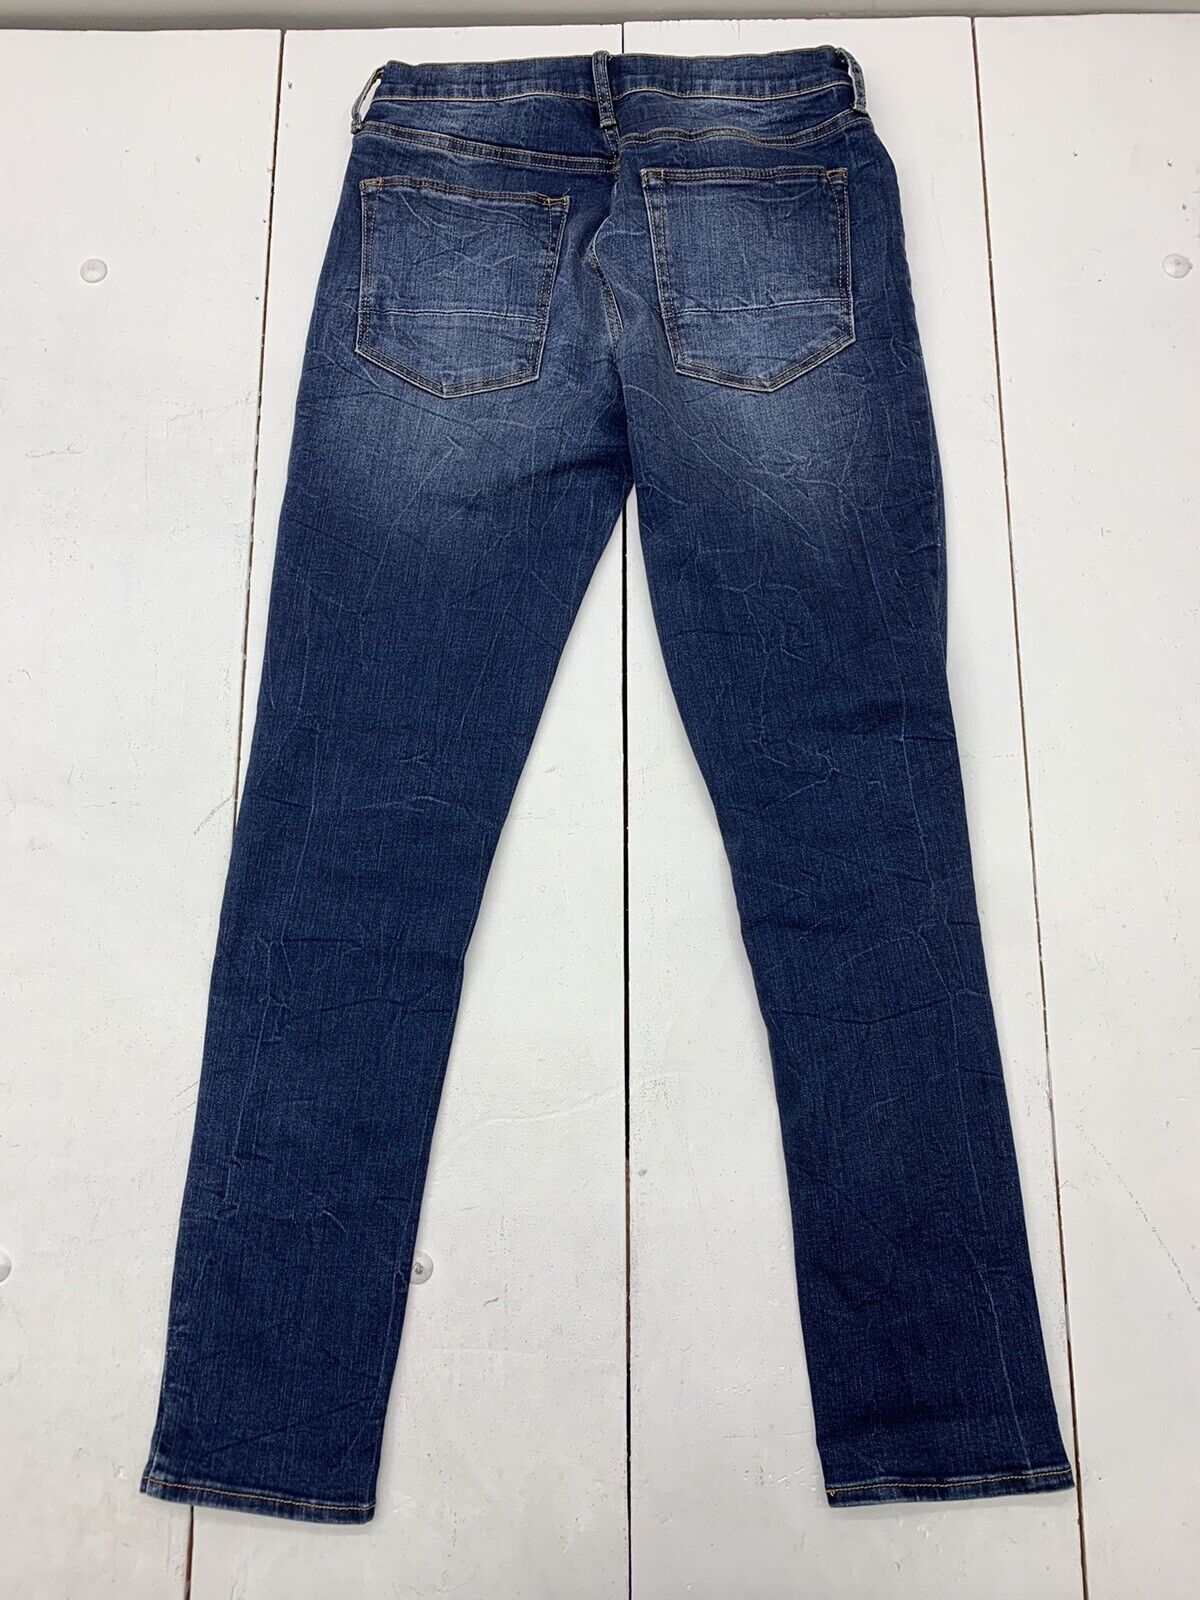 PMUYBHF Men's Cargo Pants Size 34 X 32 Men's Jeans Comfort Stretch Denim  Straight Leg Relaxed fit Jeans for Men Xl Ripped Jeans Men 30X30 -  Walmart.com